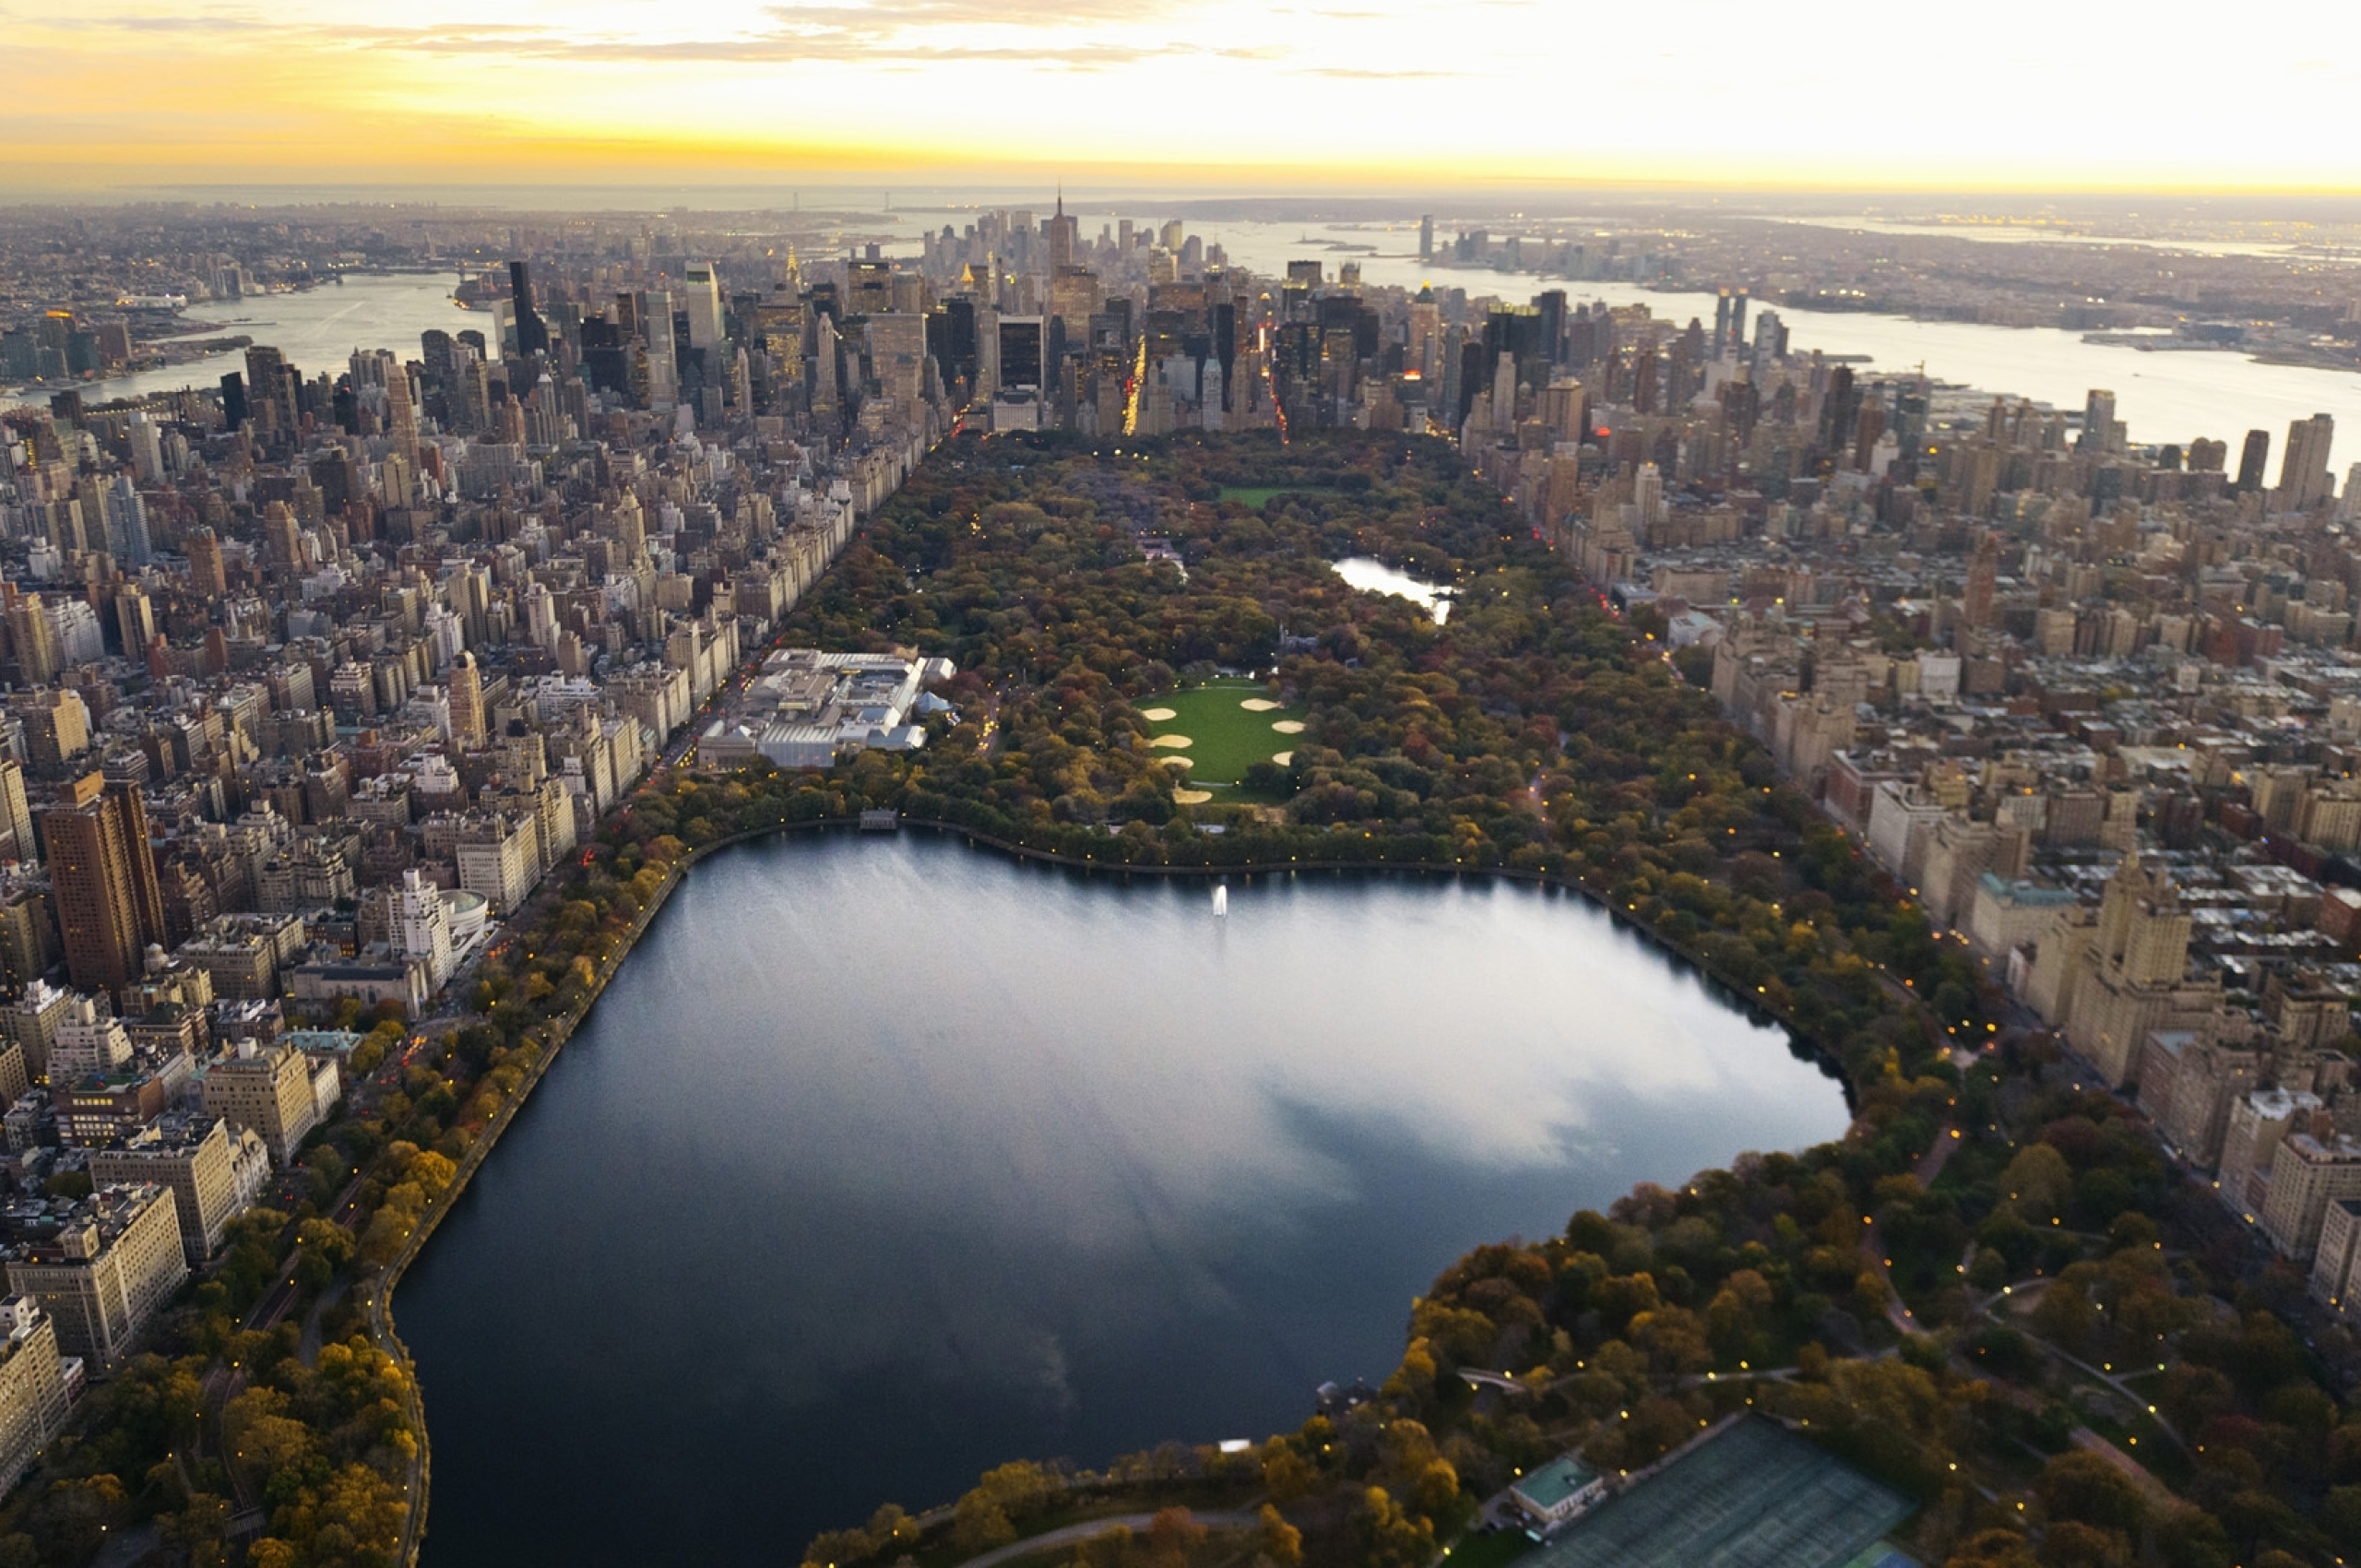 Ковид в сша. Центральный парк Нью-Йорк. Нью-Йорк Манхэттен Центральный парк. Центральный парк Нью-Йорка вид сверху. Панорама централ парк Нью Йорк.